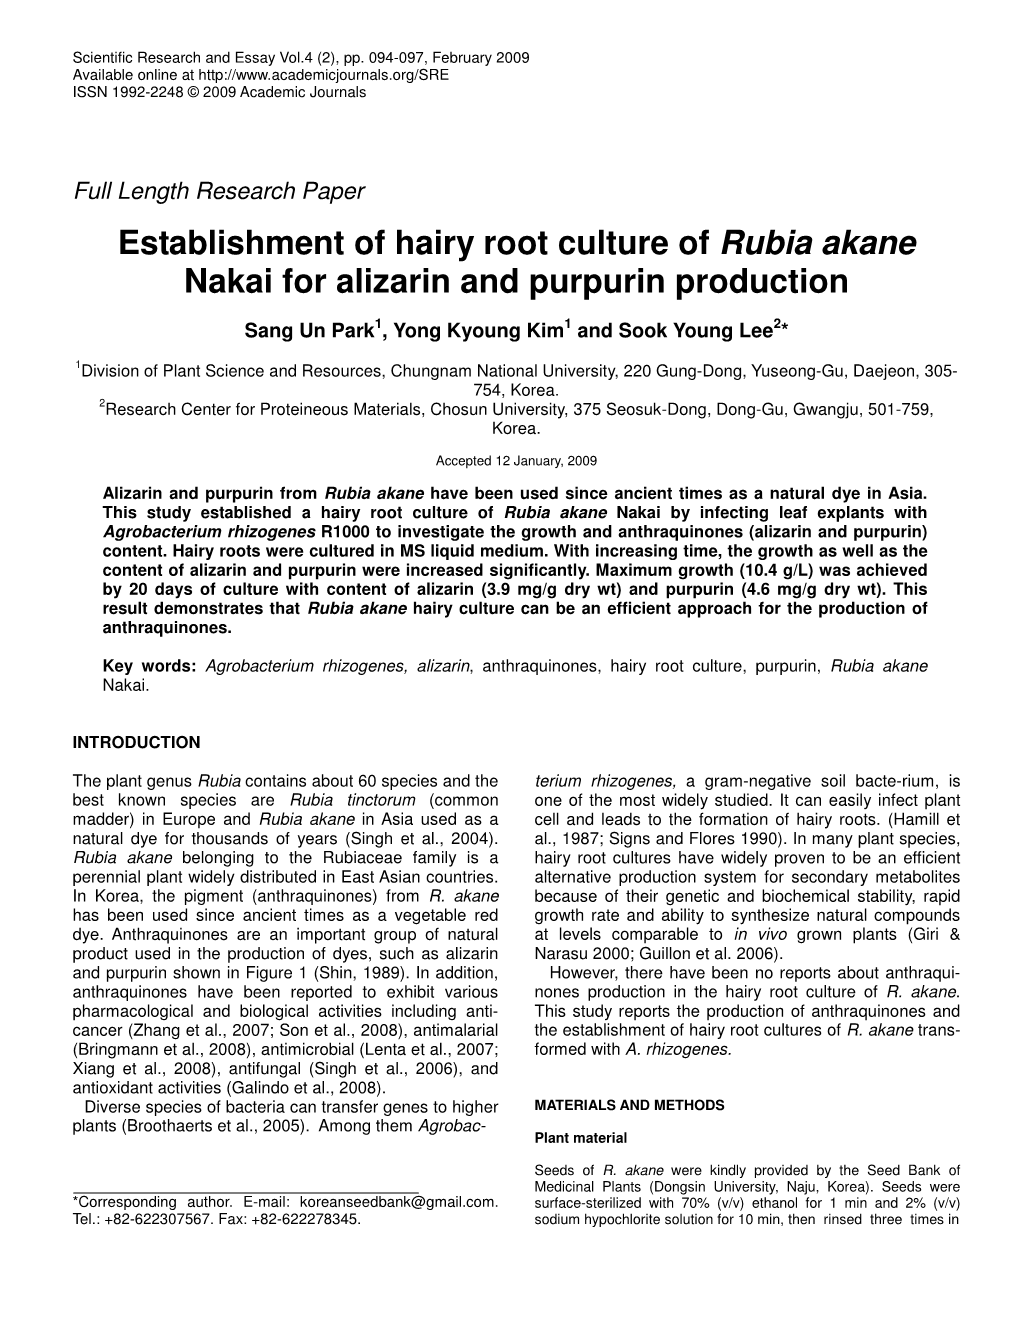 Establishment of Hairy Root Culture of Rubia Akane Nakai for Alizarin and Purpurin Production